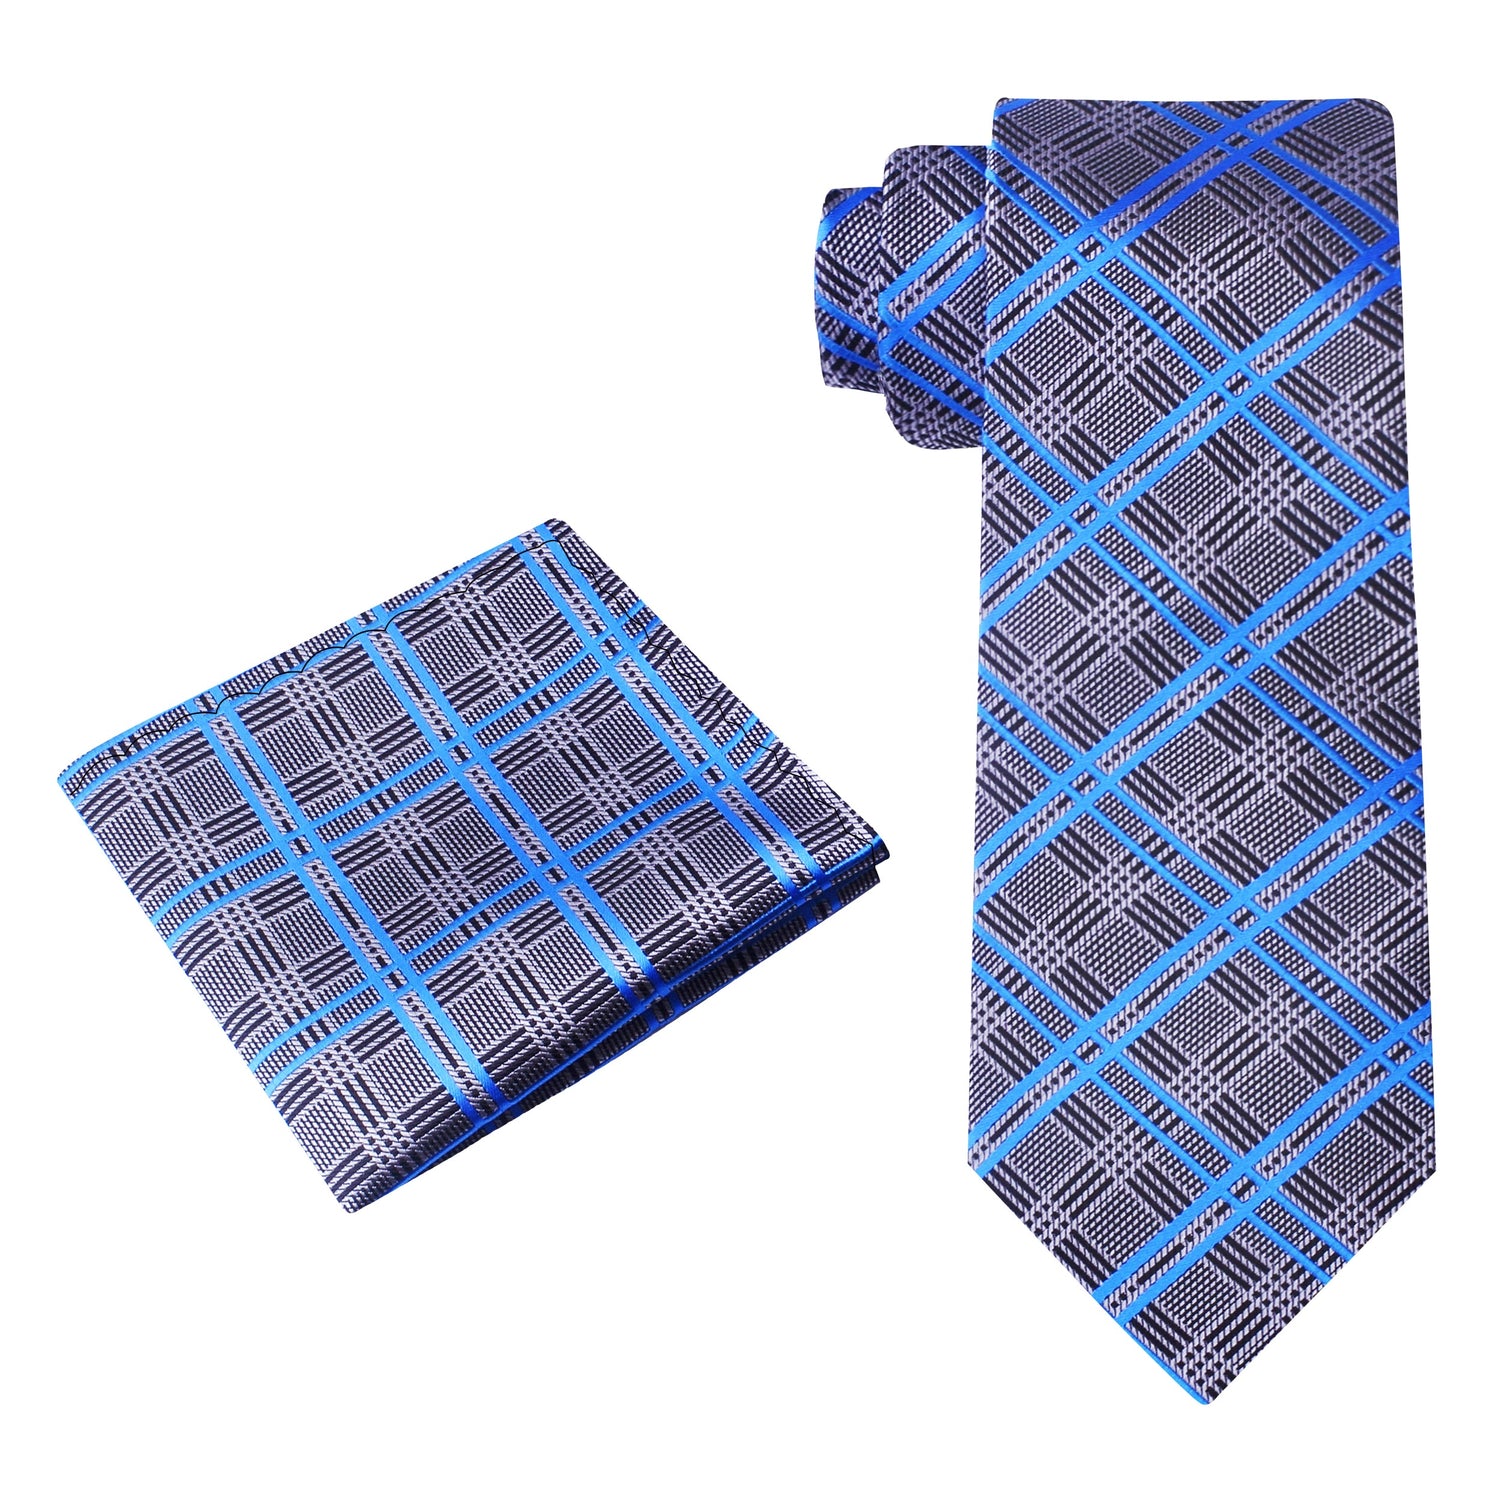 Alt View: Grey, Blue, Black Plaid Tie and Square